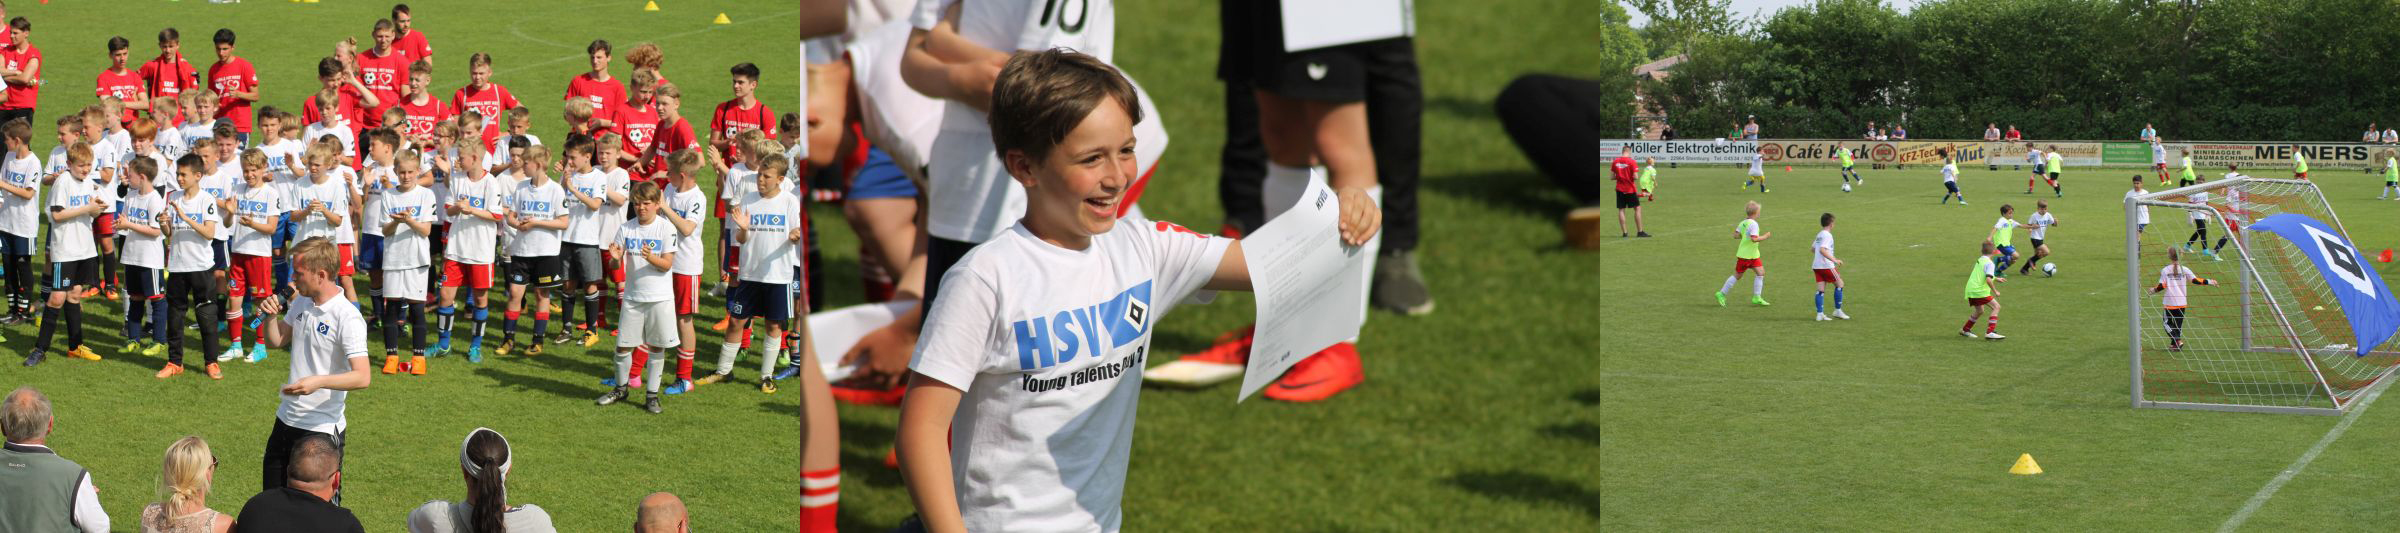 Young Talents Day mit dem HSV beim SV Eichede